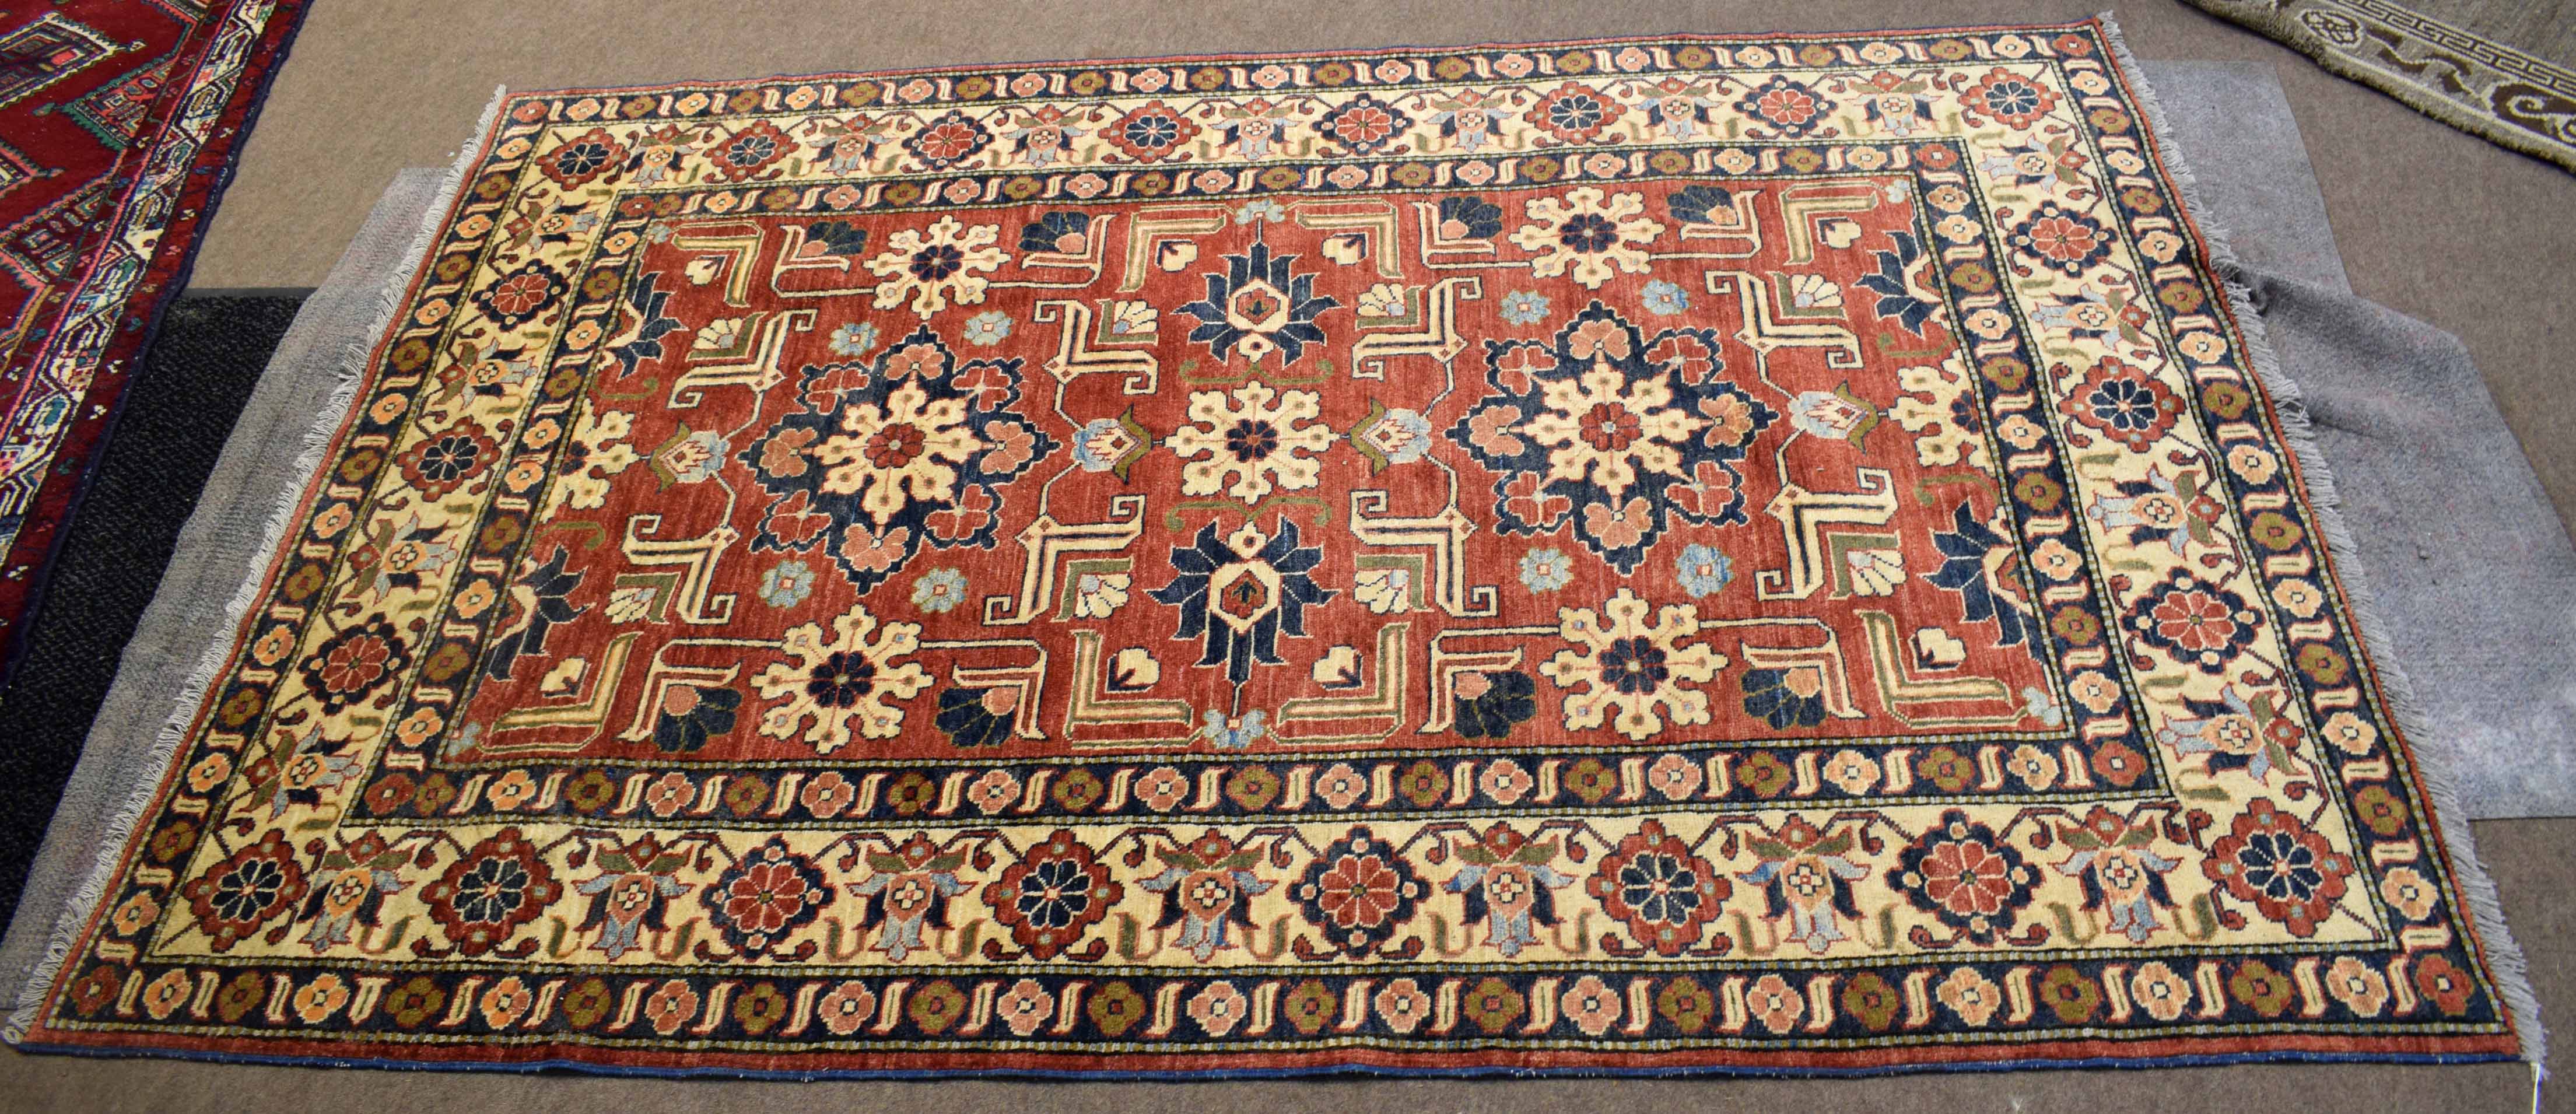 Modern Caucasian style carpet, central panel of geometric lozenges, foliage etc, mainly rust